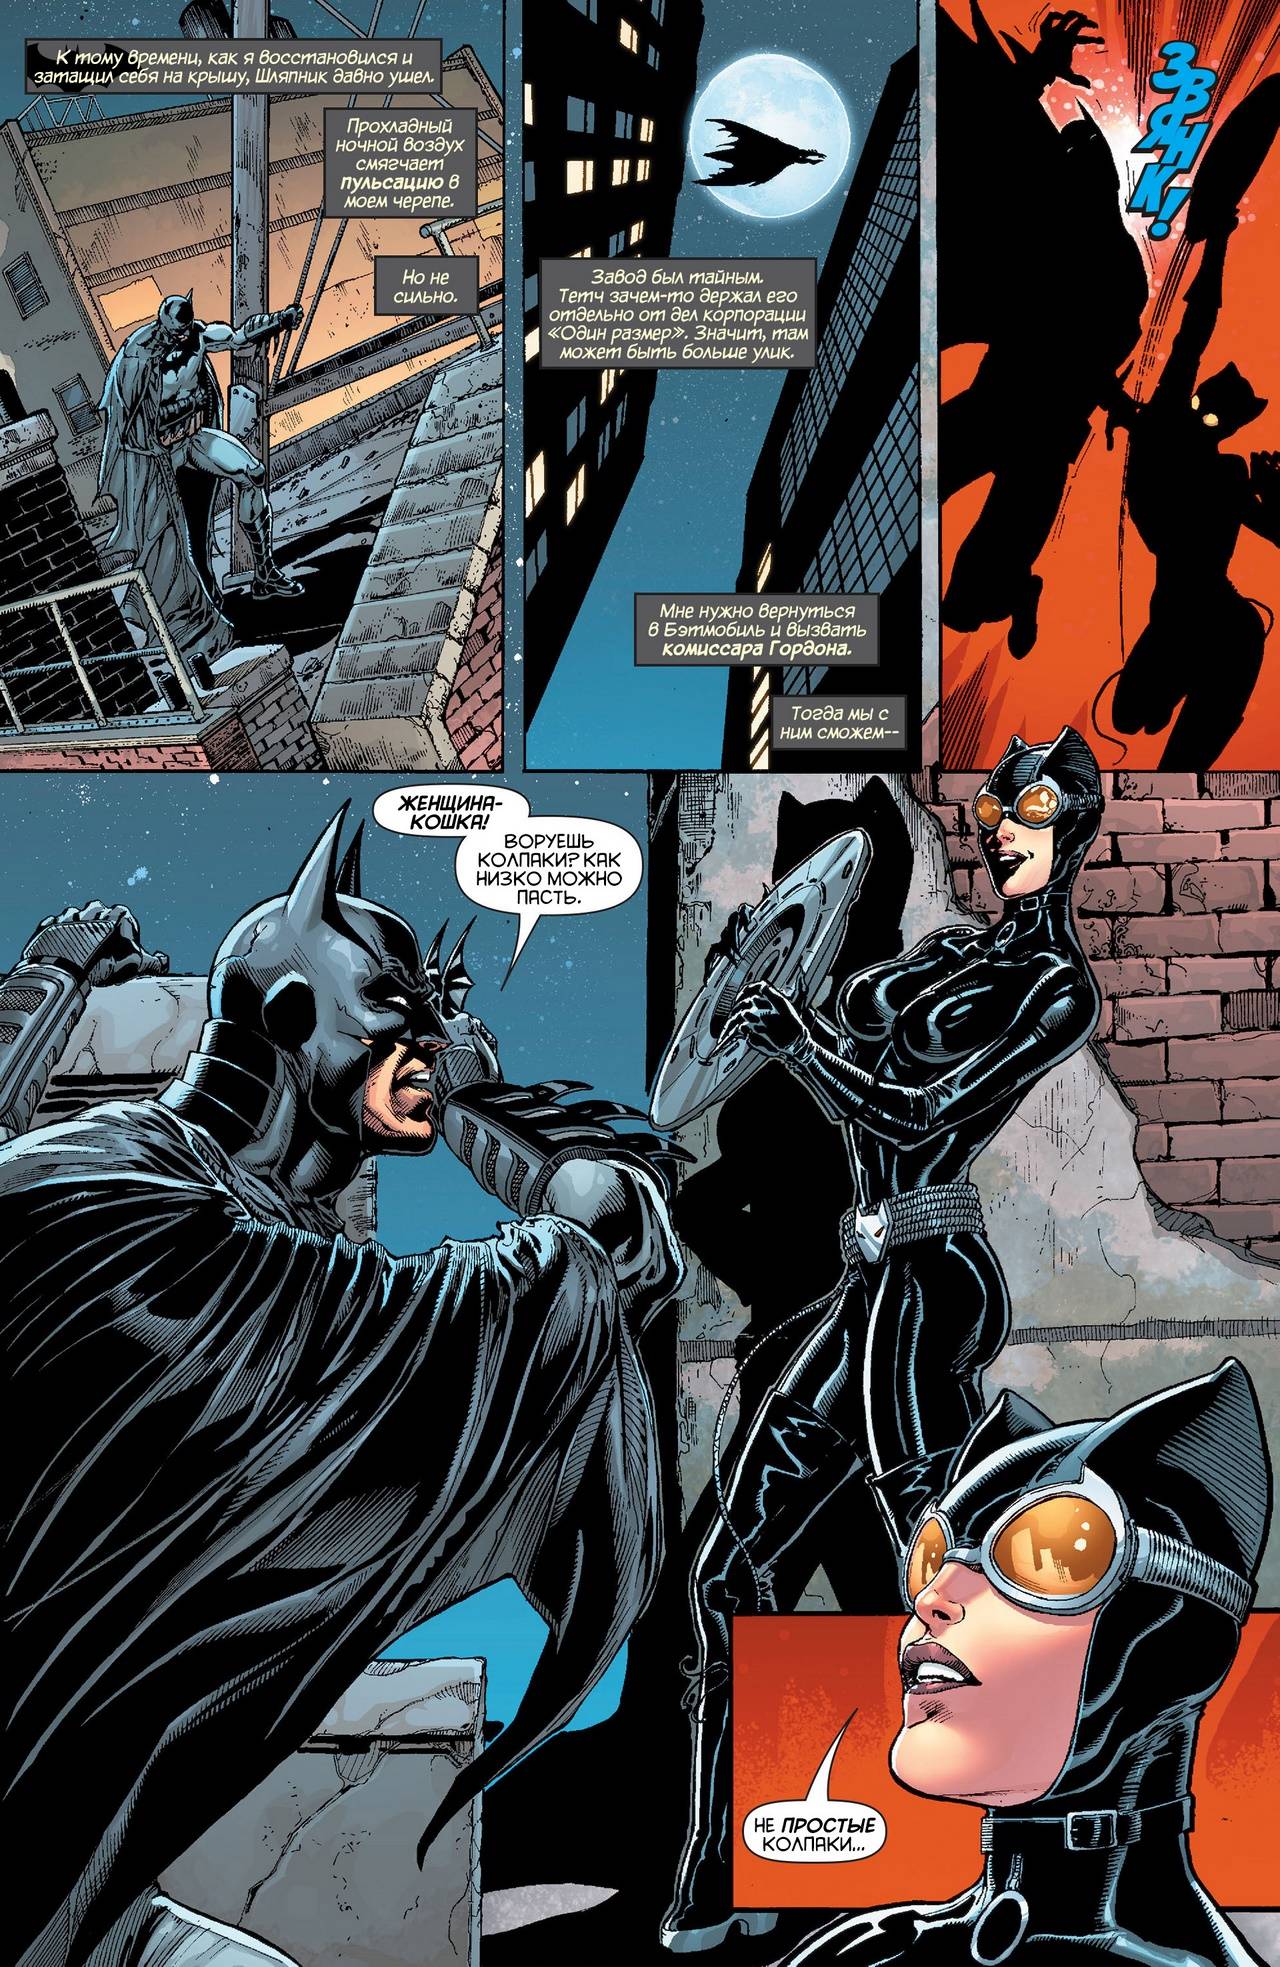 Комикс Бэтмен и женщина кошка 18. Комикс Бэтмен 18 +. Бэтмен и женщина кошка комикс. Комиксы про Бэтмена и женщину кошку. Batman 18